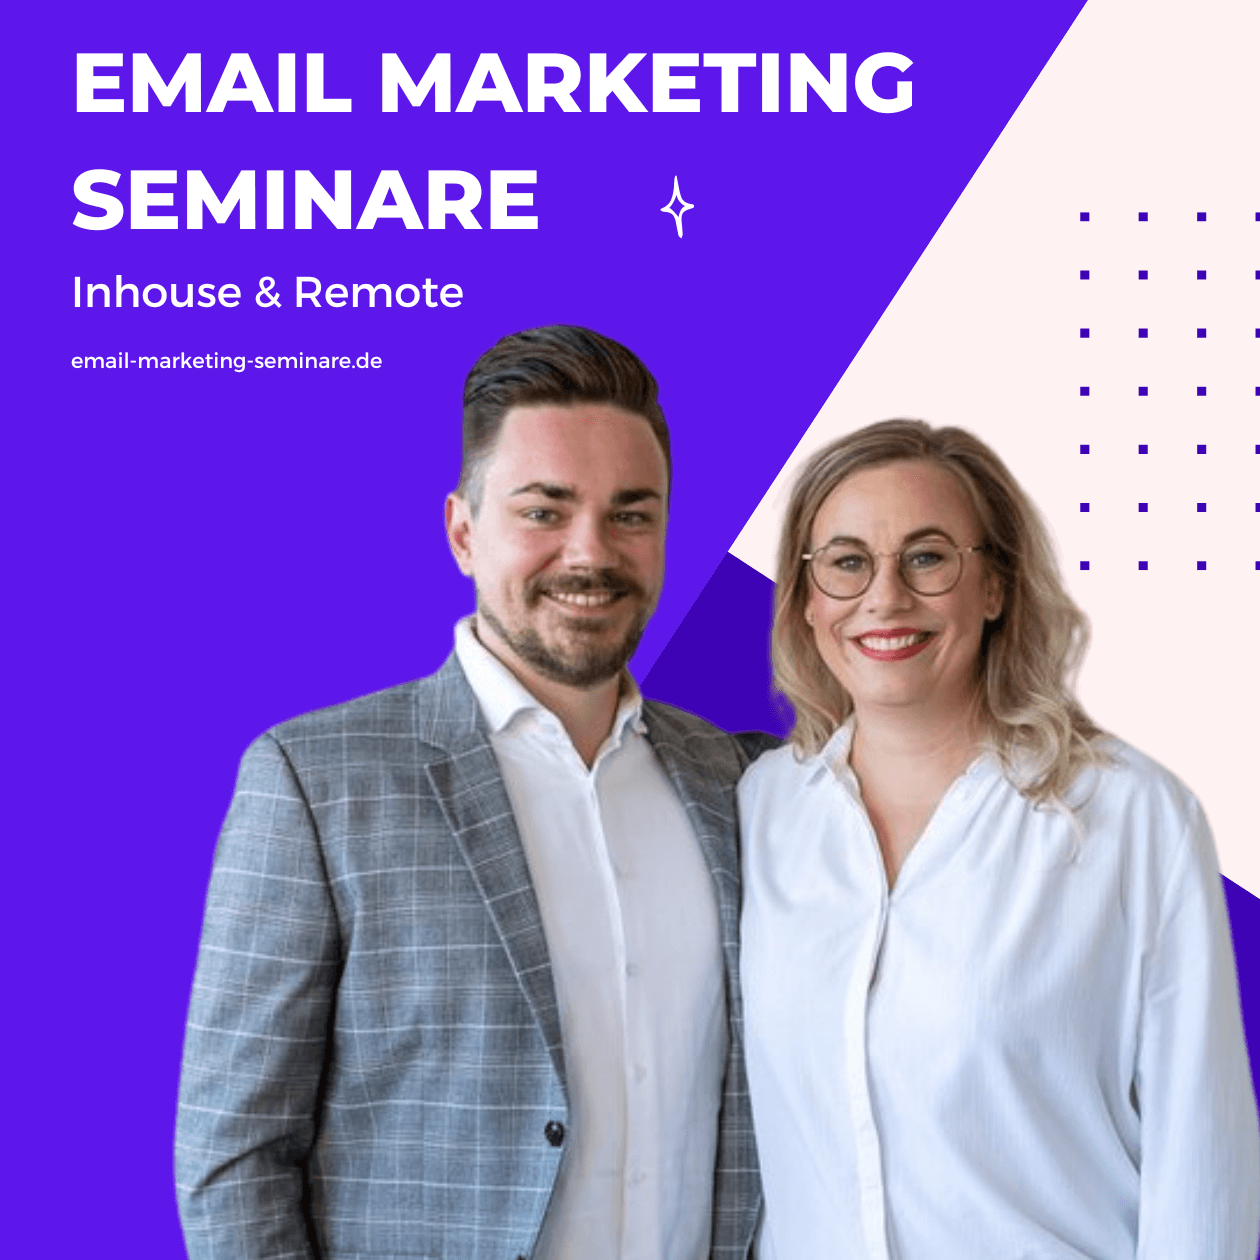 (c) Email-marketing-seminare.de